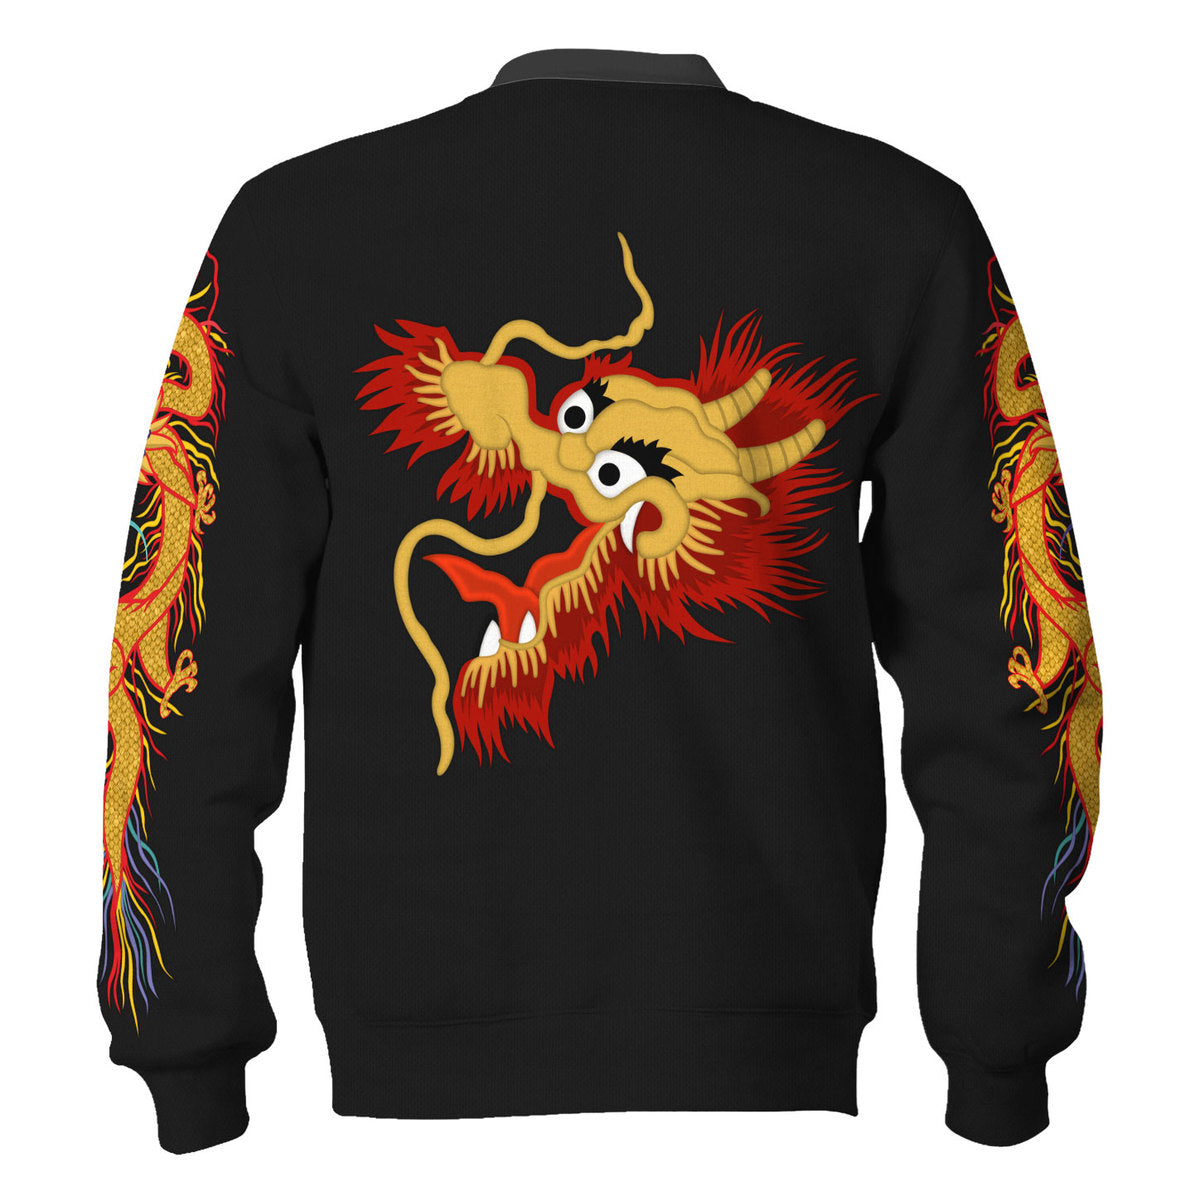 Gearhomie Jimmy Page Dragon Suit Costume Hoodie Sweatshirt T-Shirt Tra ...